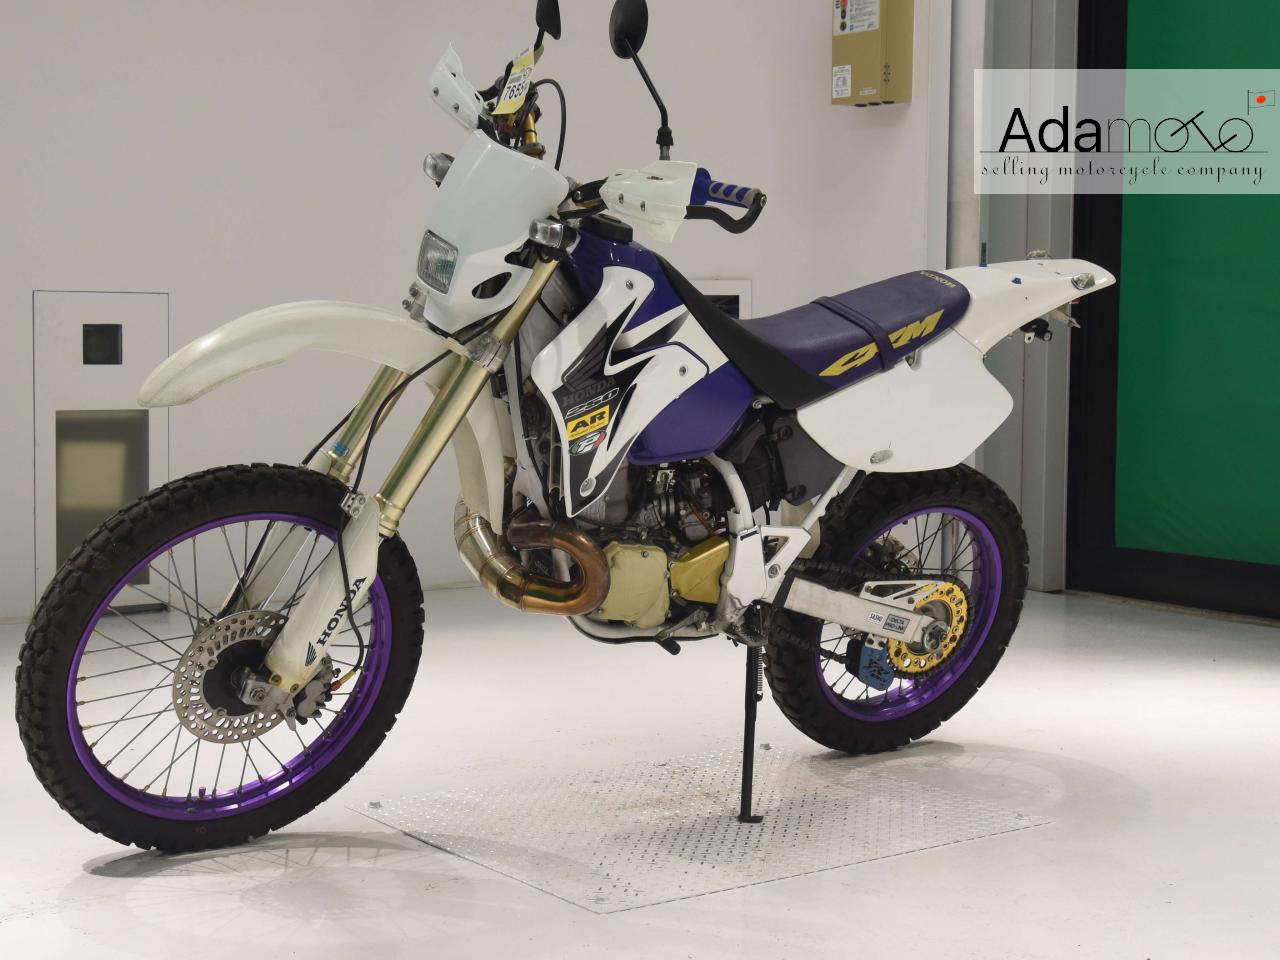 Honda CRM250AR - Adamoto - Motorcycles from Japan